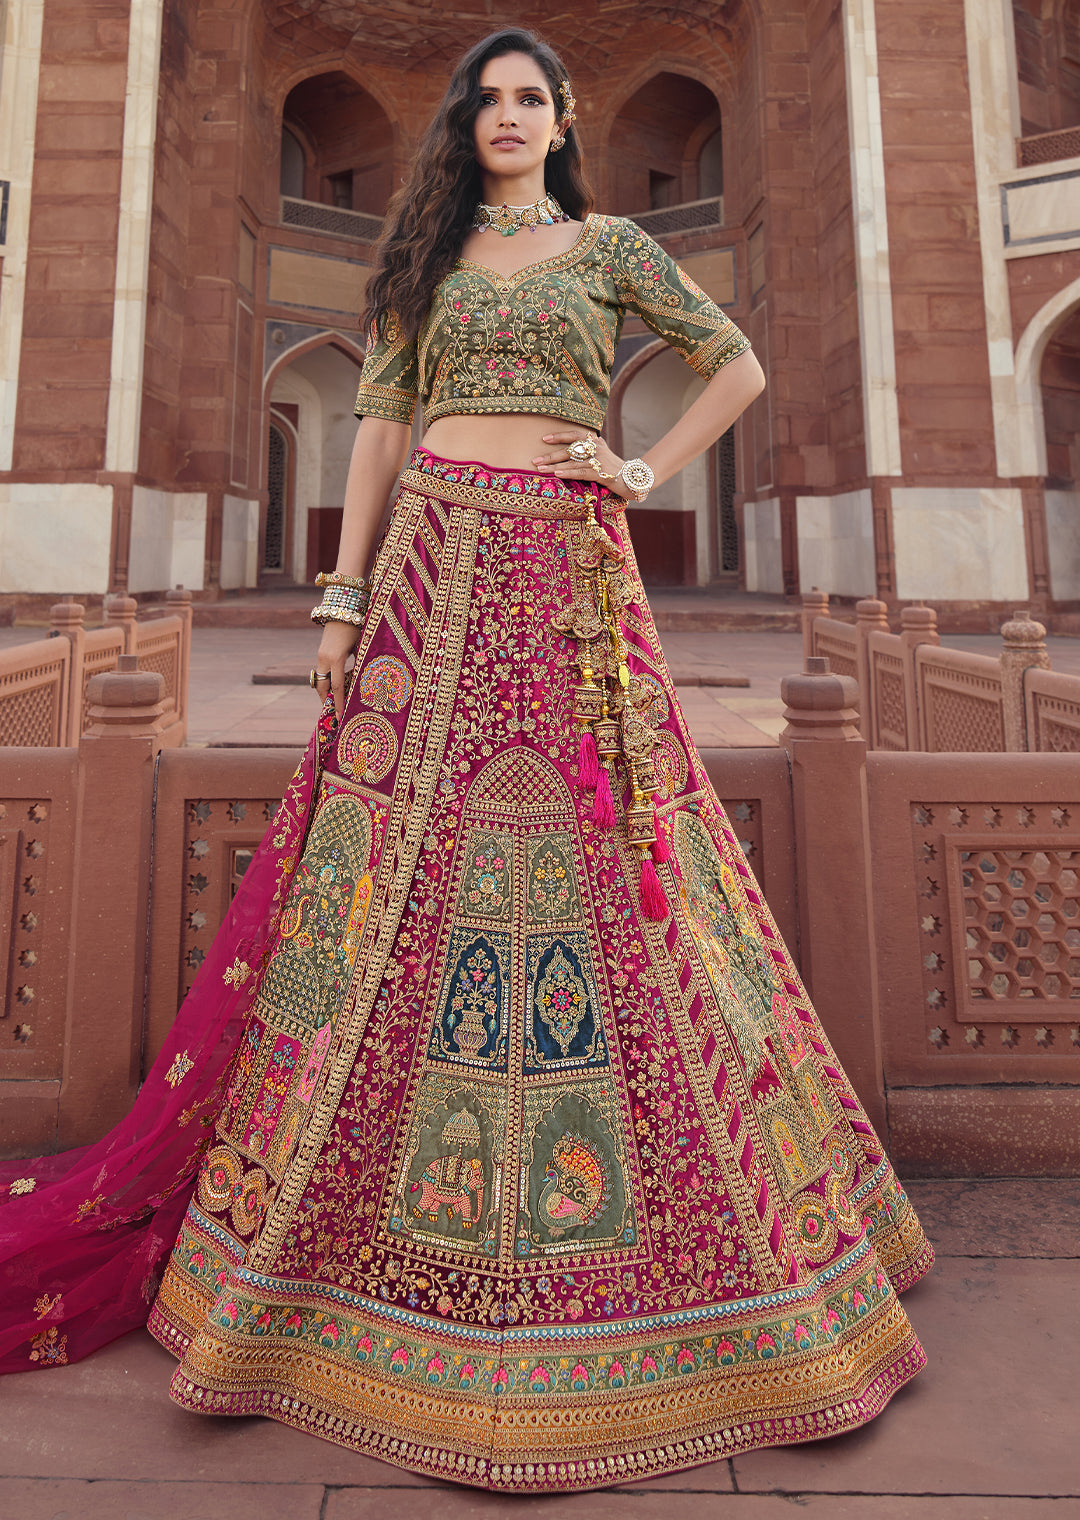 Red Bridal Lehenga Choli Shawl Indian Ethnic Wedding Wear Lengha Lehanga  Saree | eBay